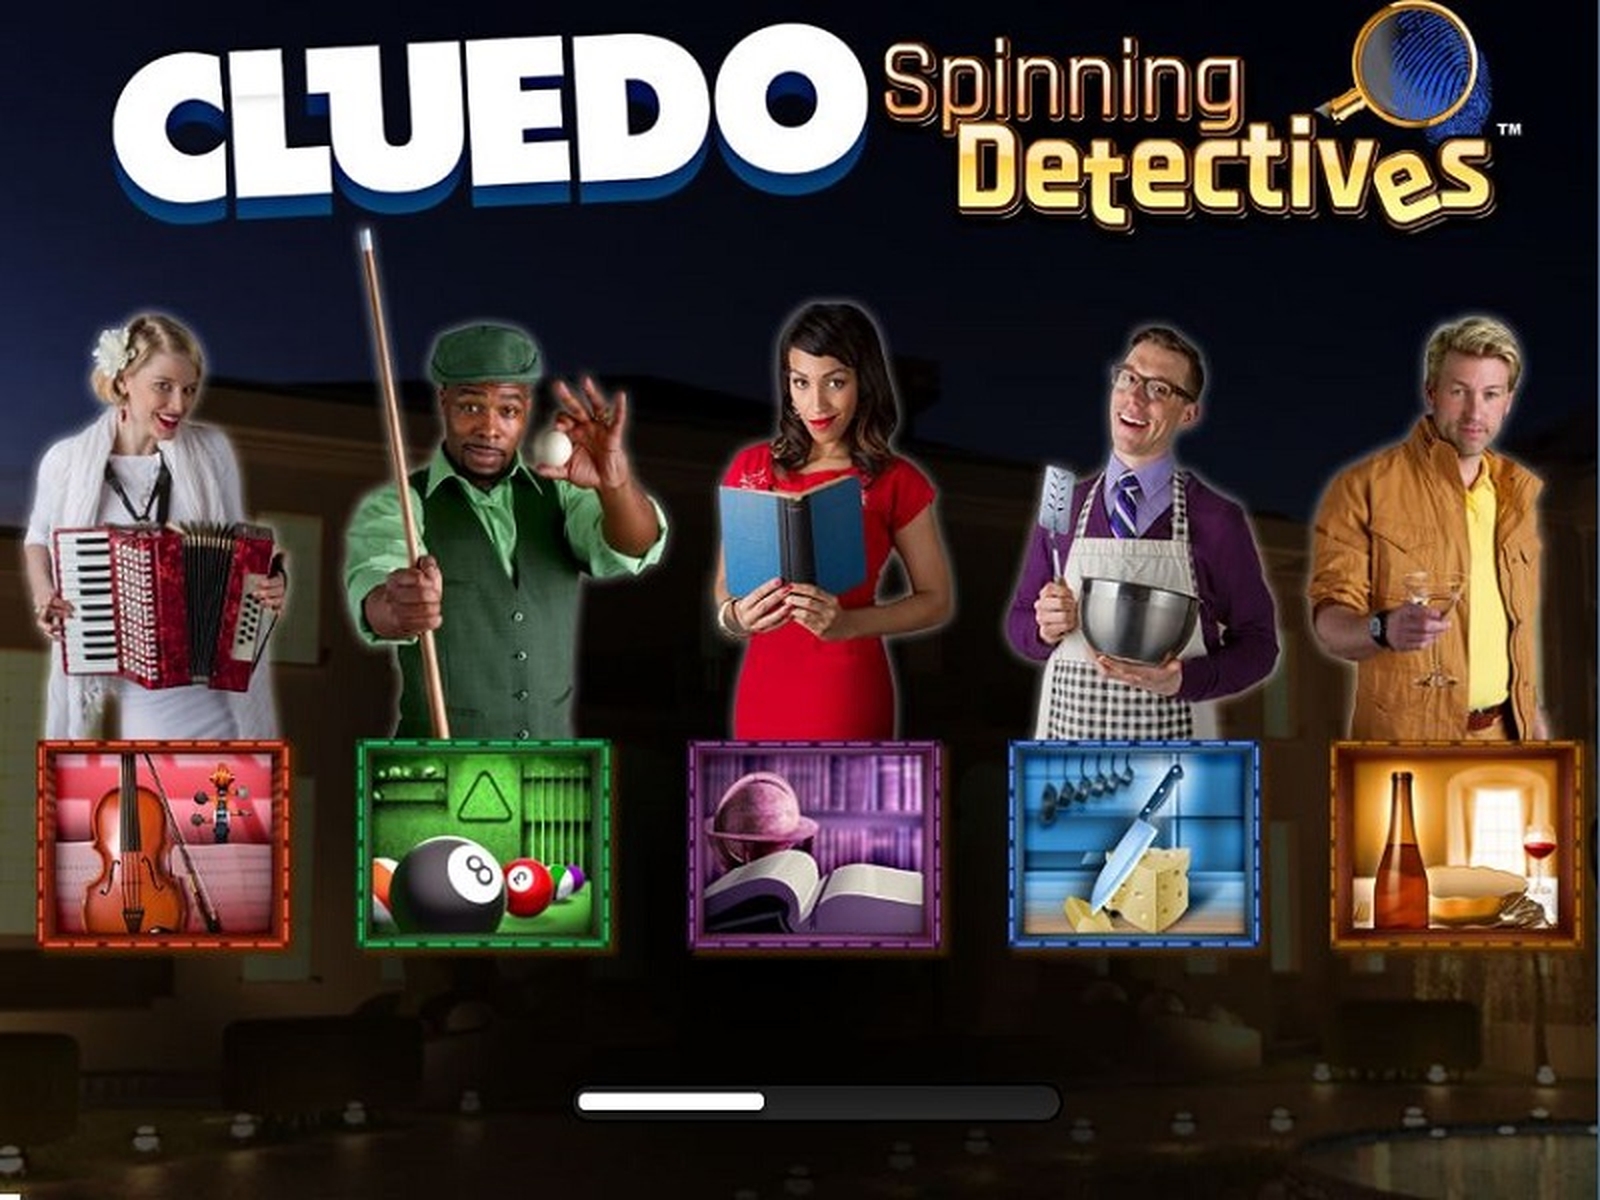 CLUEDO Spinning Detectives demo